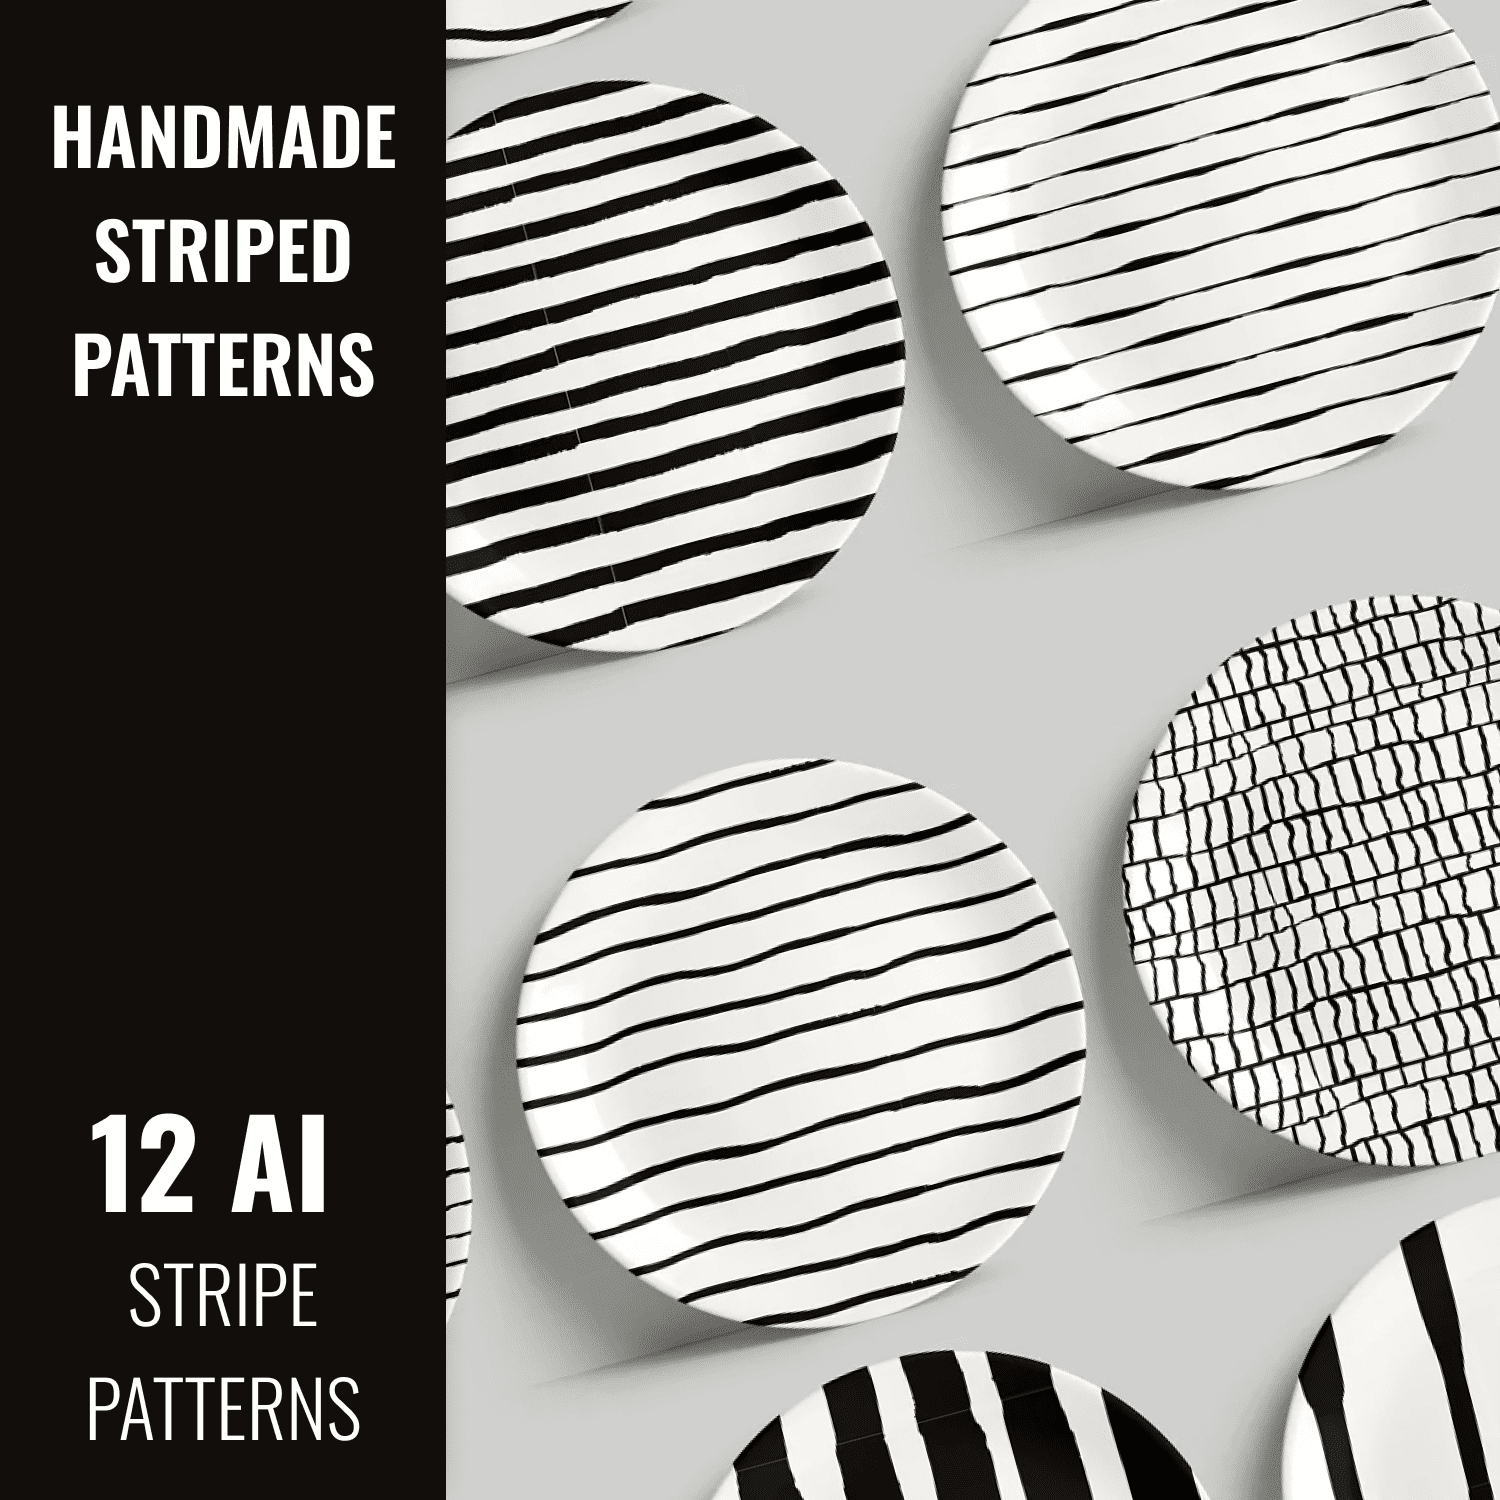 Handmade Striped Patterns.